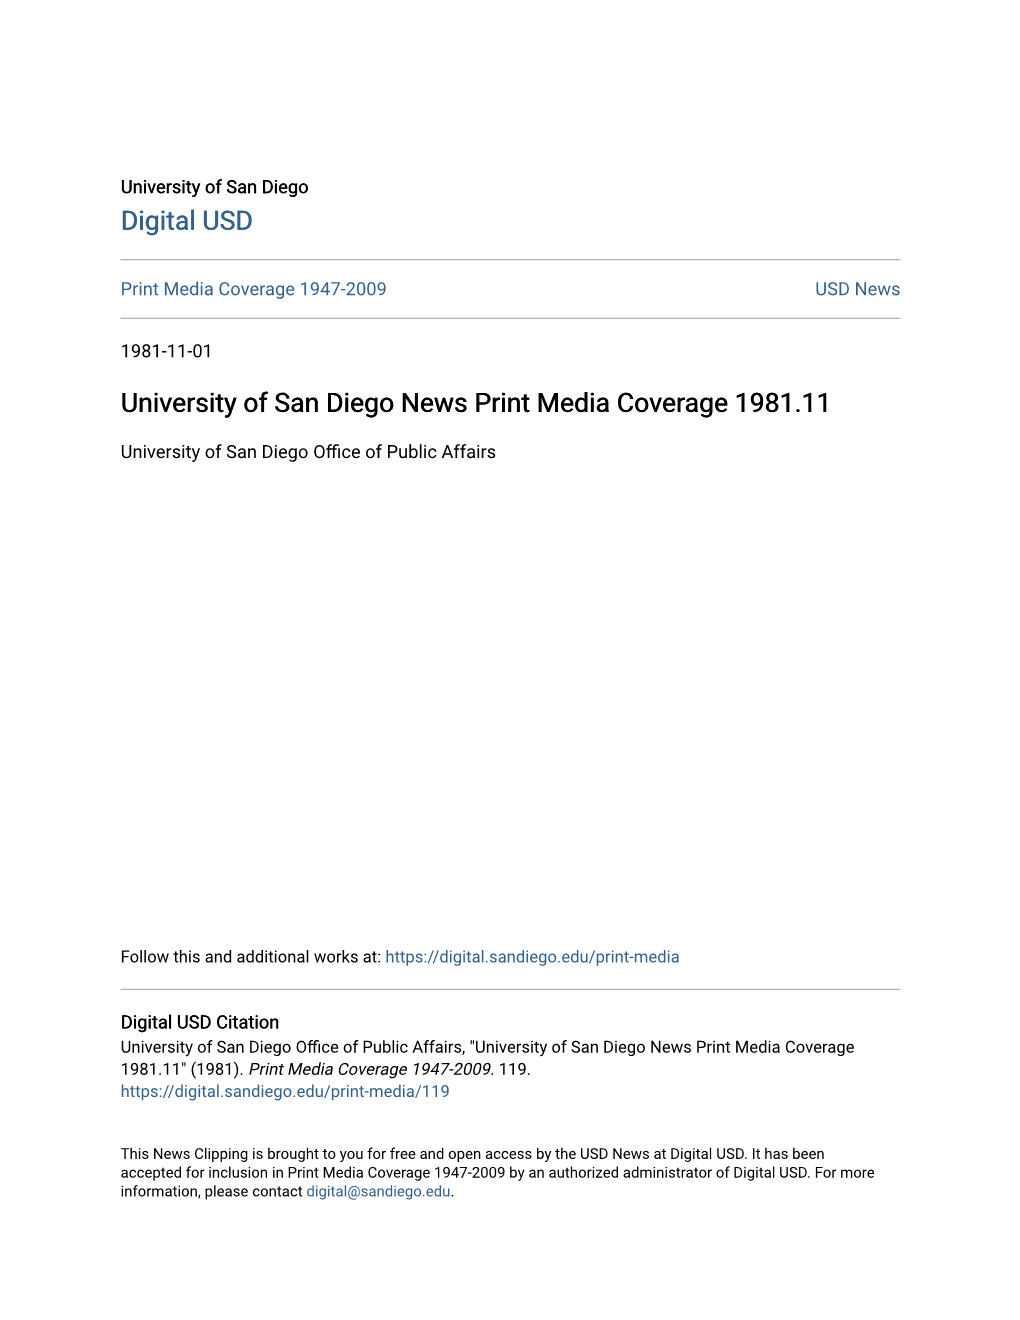 University of San Diego News Print Media Coverage 1981.11